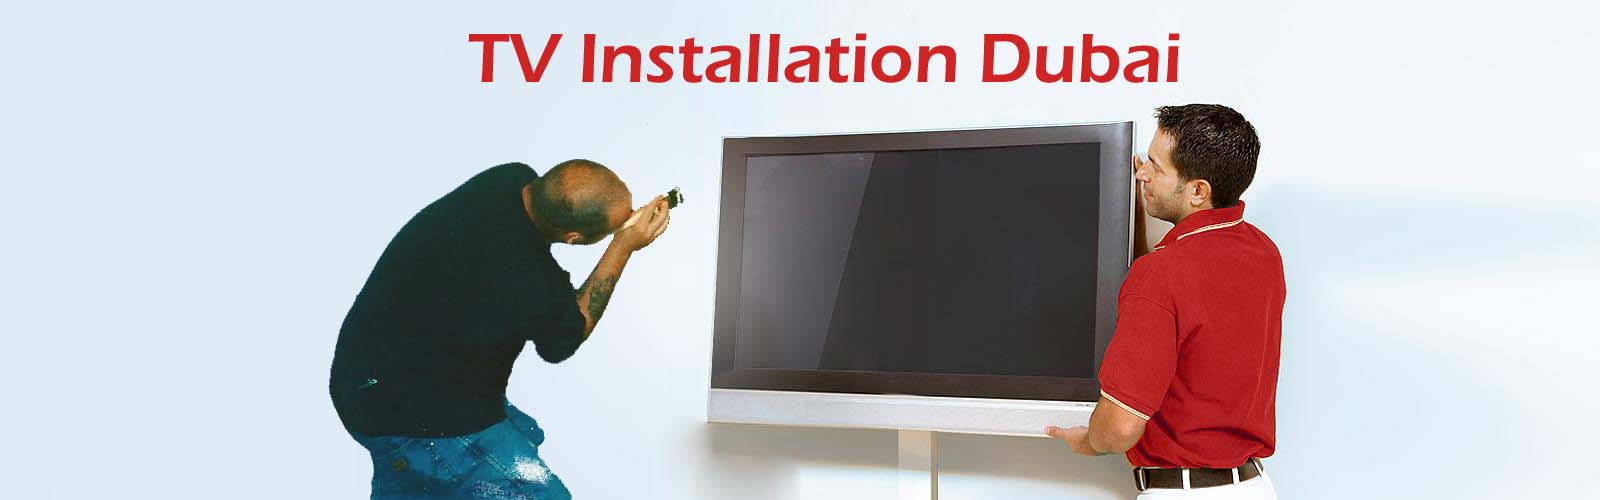 TV installation Dubai 